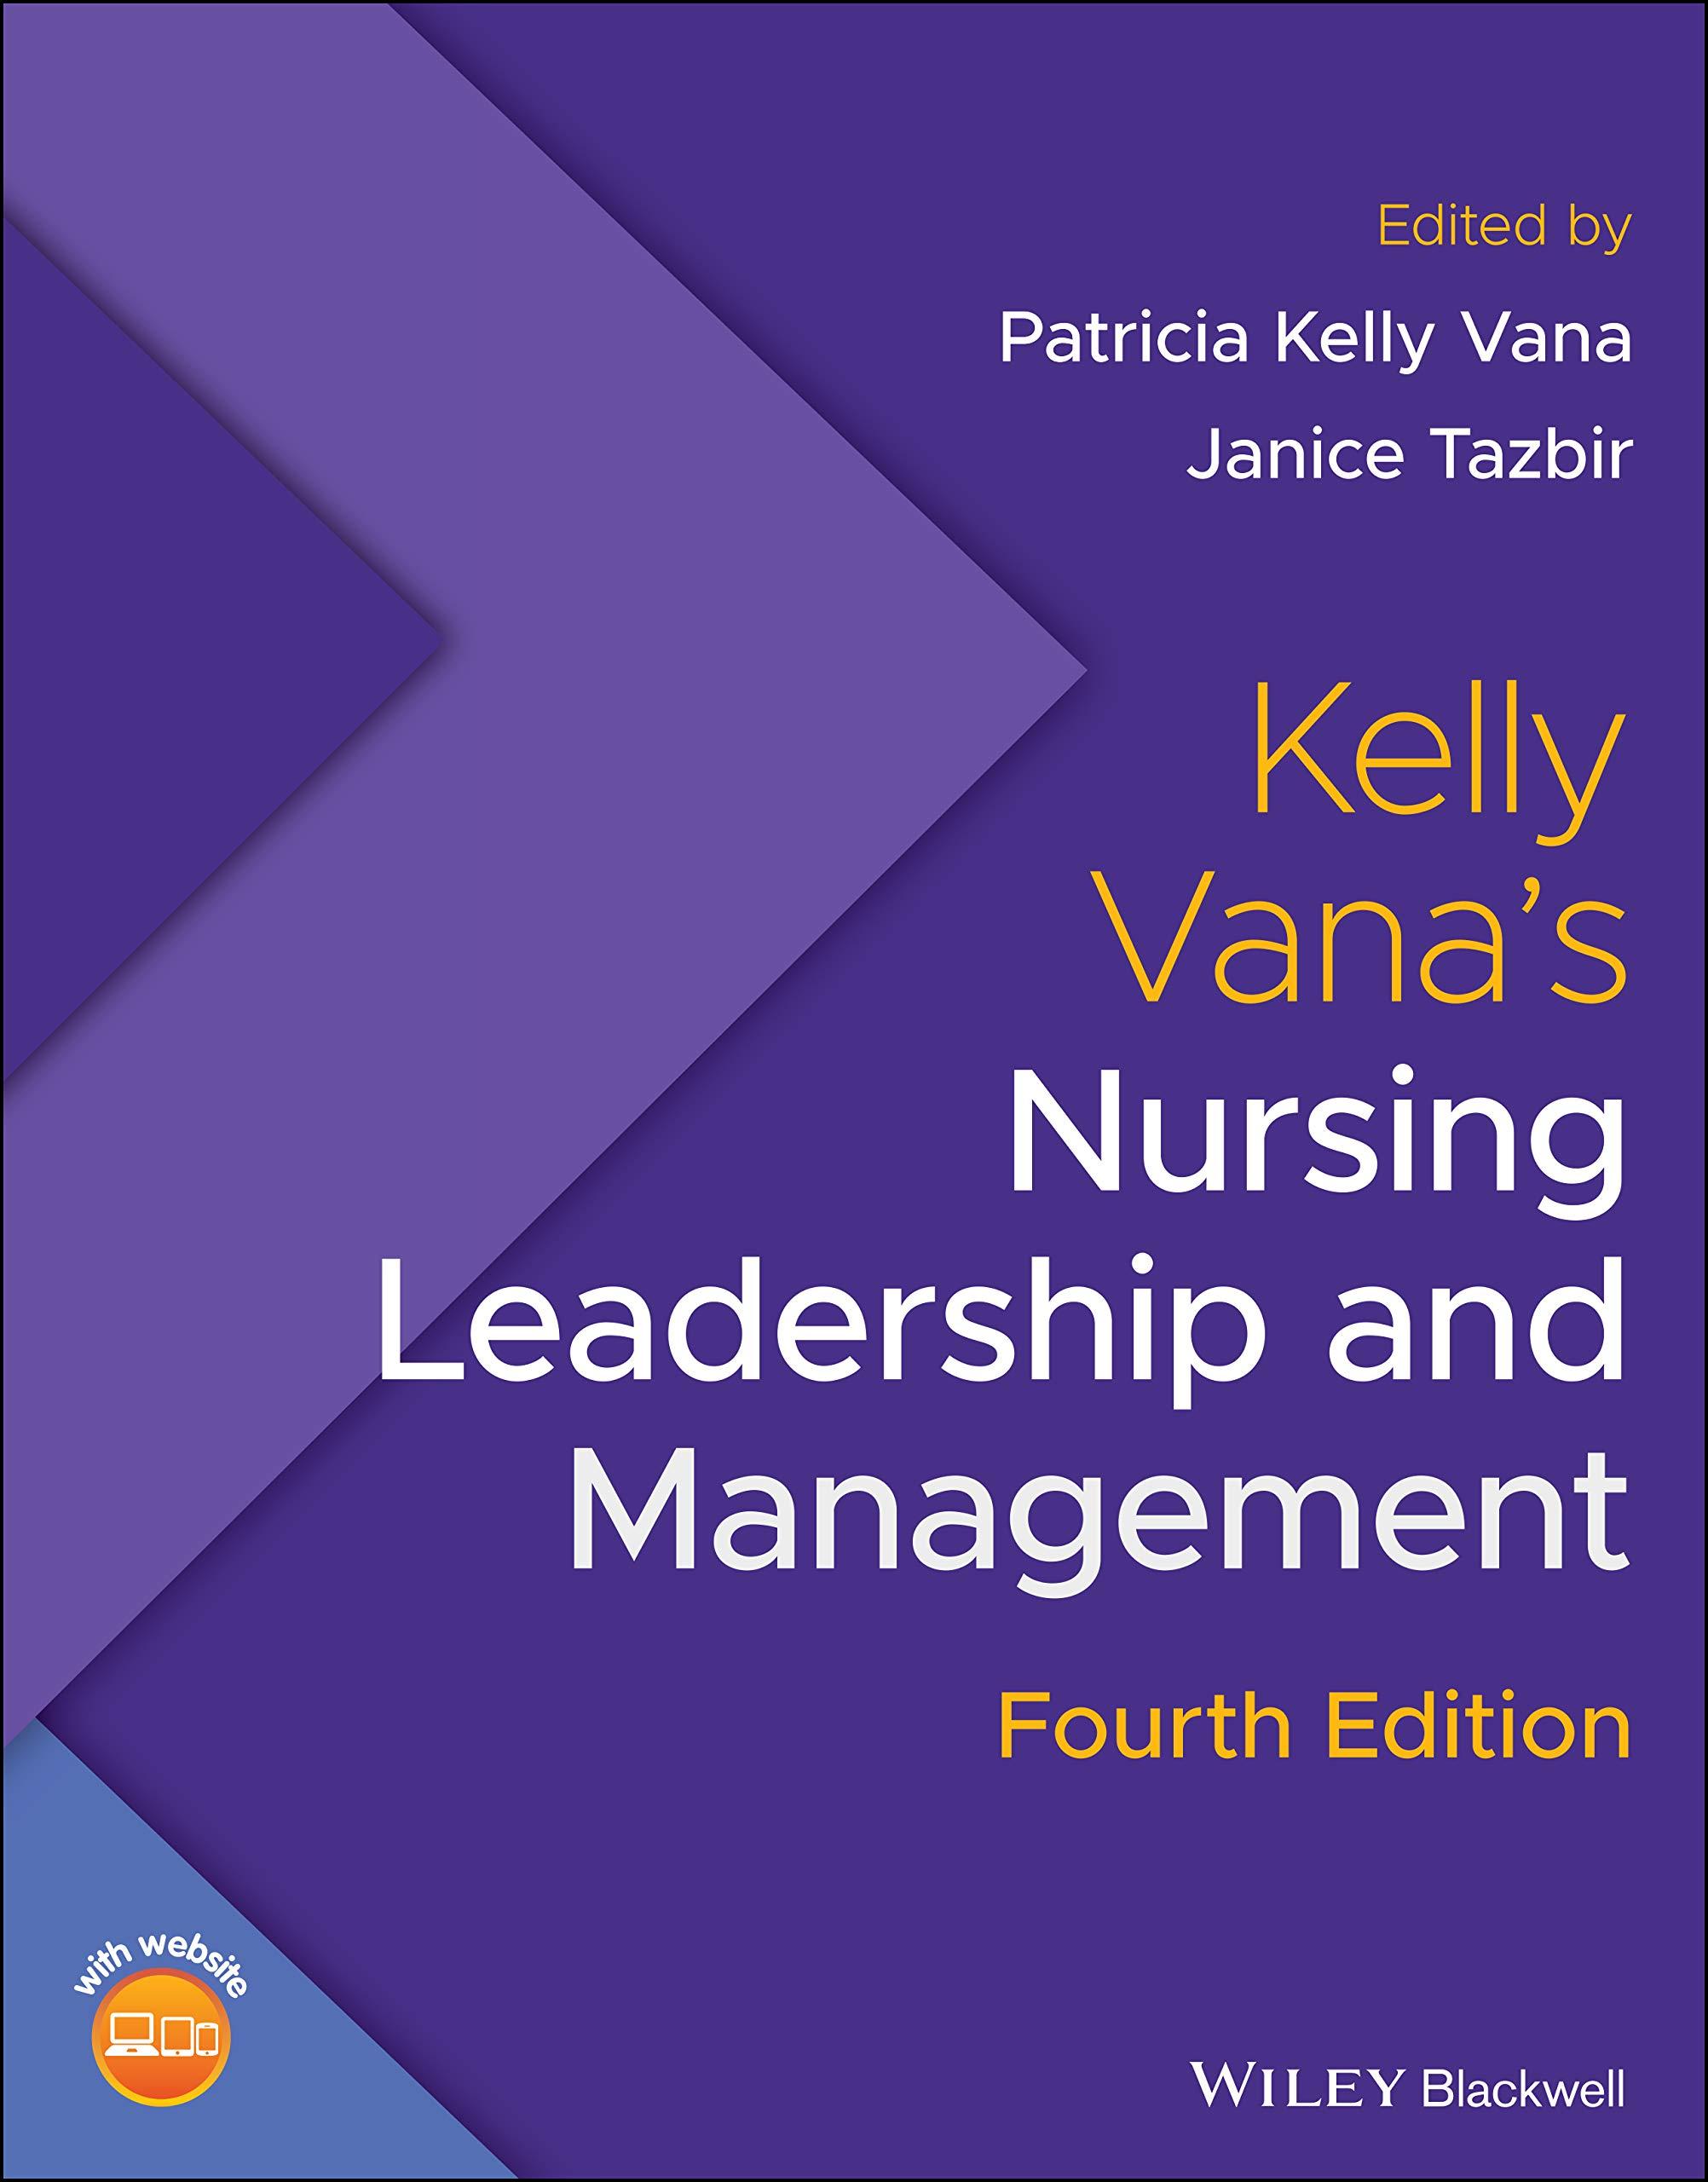 kelly vanas nursing leadership and management 4th edition patricia kelly vana, janice tazbir 1119596610,